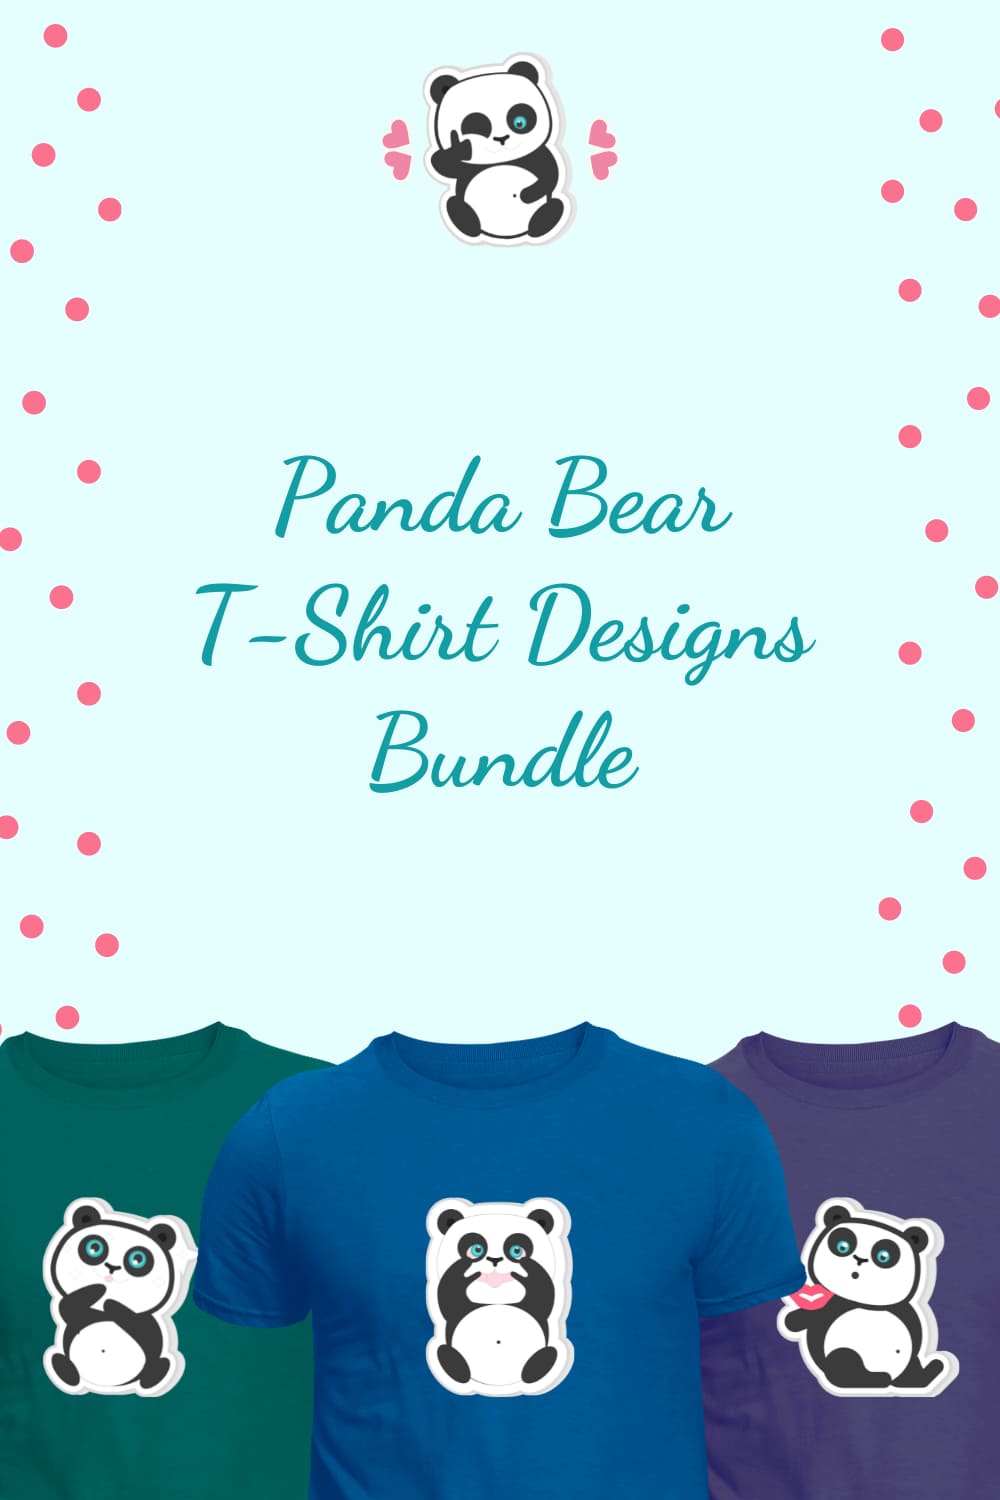 Panda Bear Svg T-shirt Designs Bundle - Pinterest.